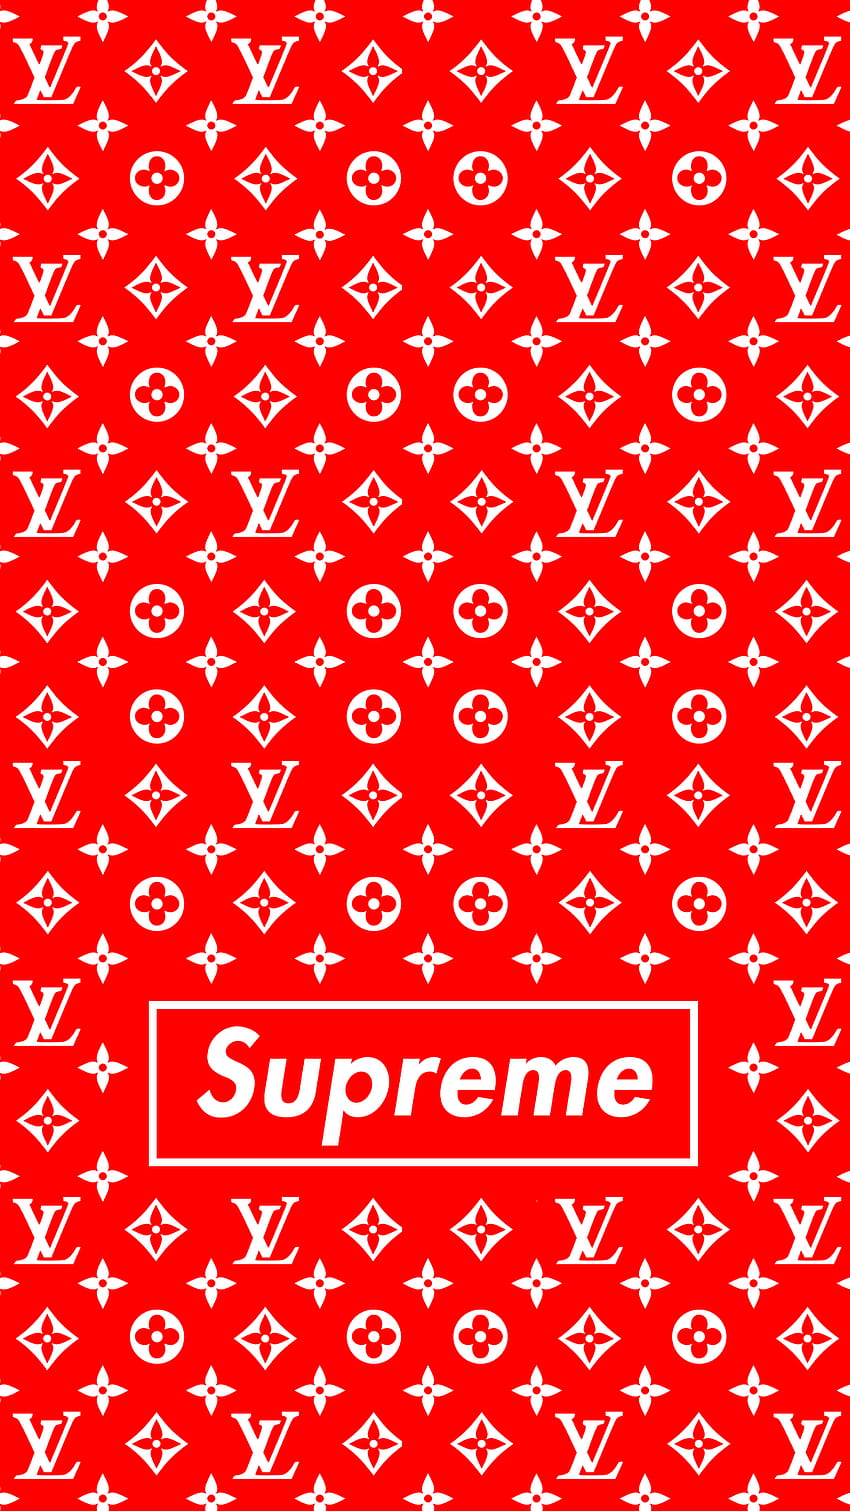 Supreme X Lv Yeezy